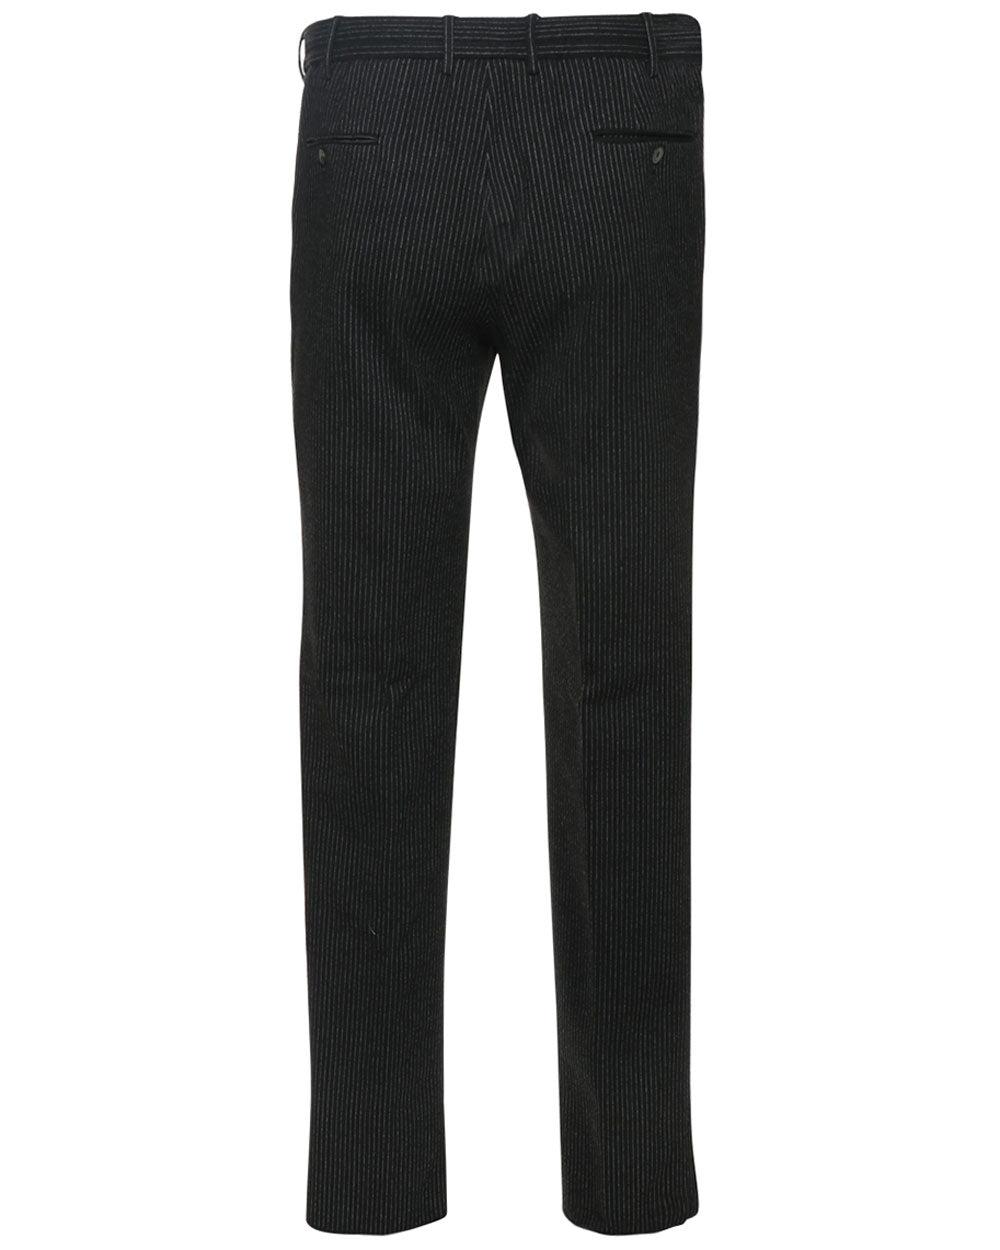 Slim Fit Brushed Jersey Pant in Black Pinstripe